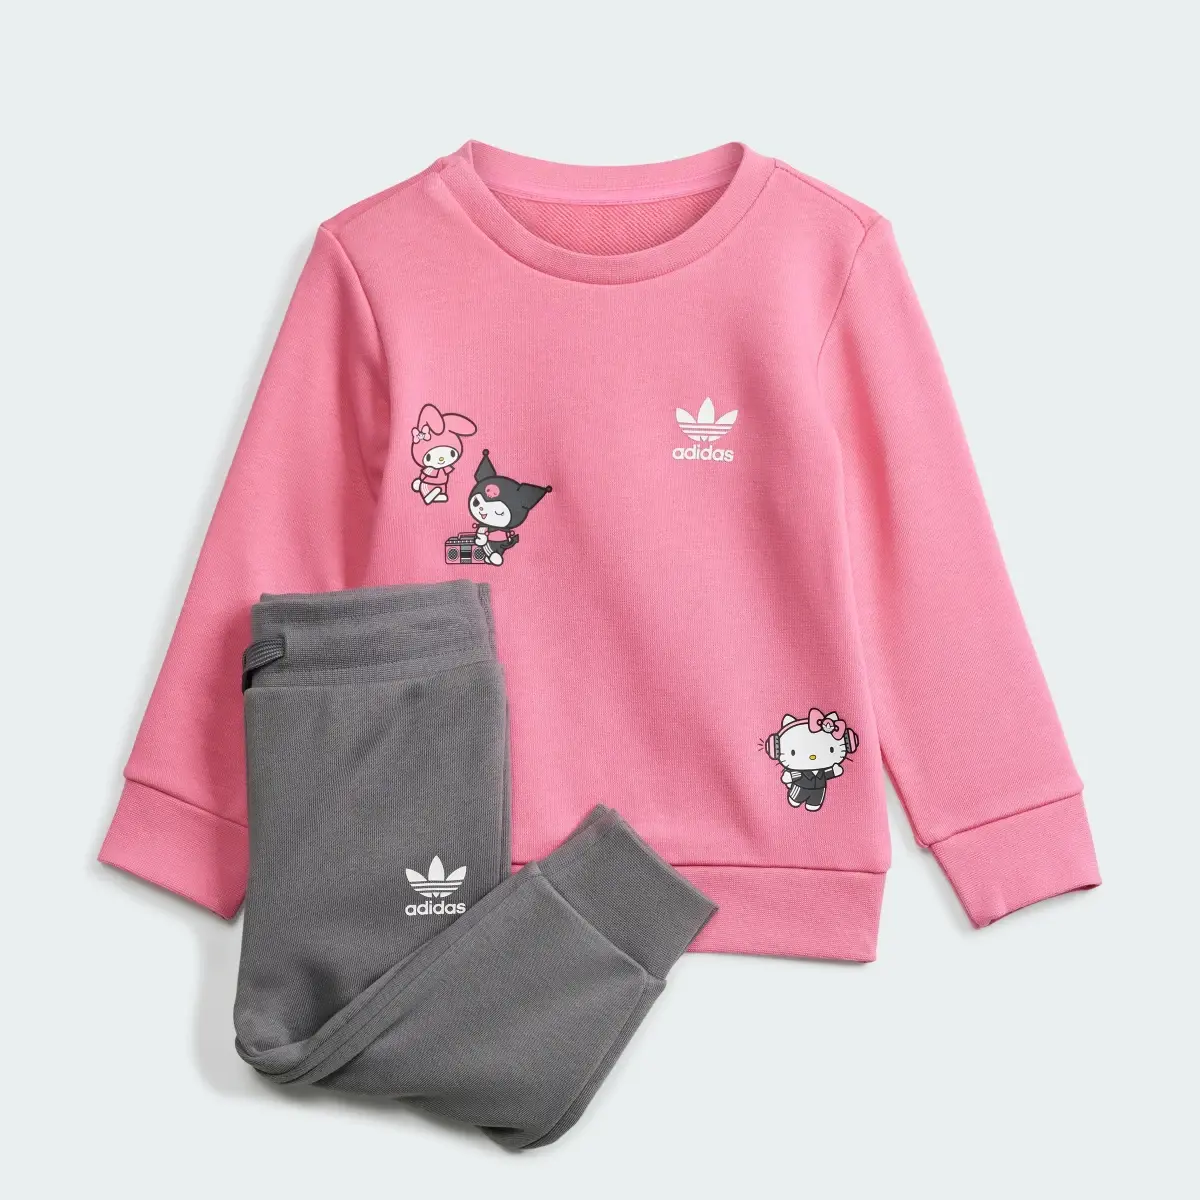 Adidas Originals x Hello Kitty Crew Set. 1